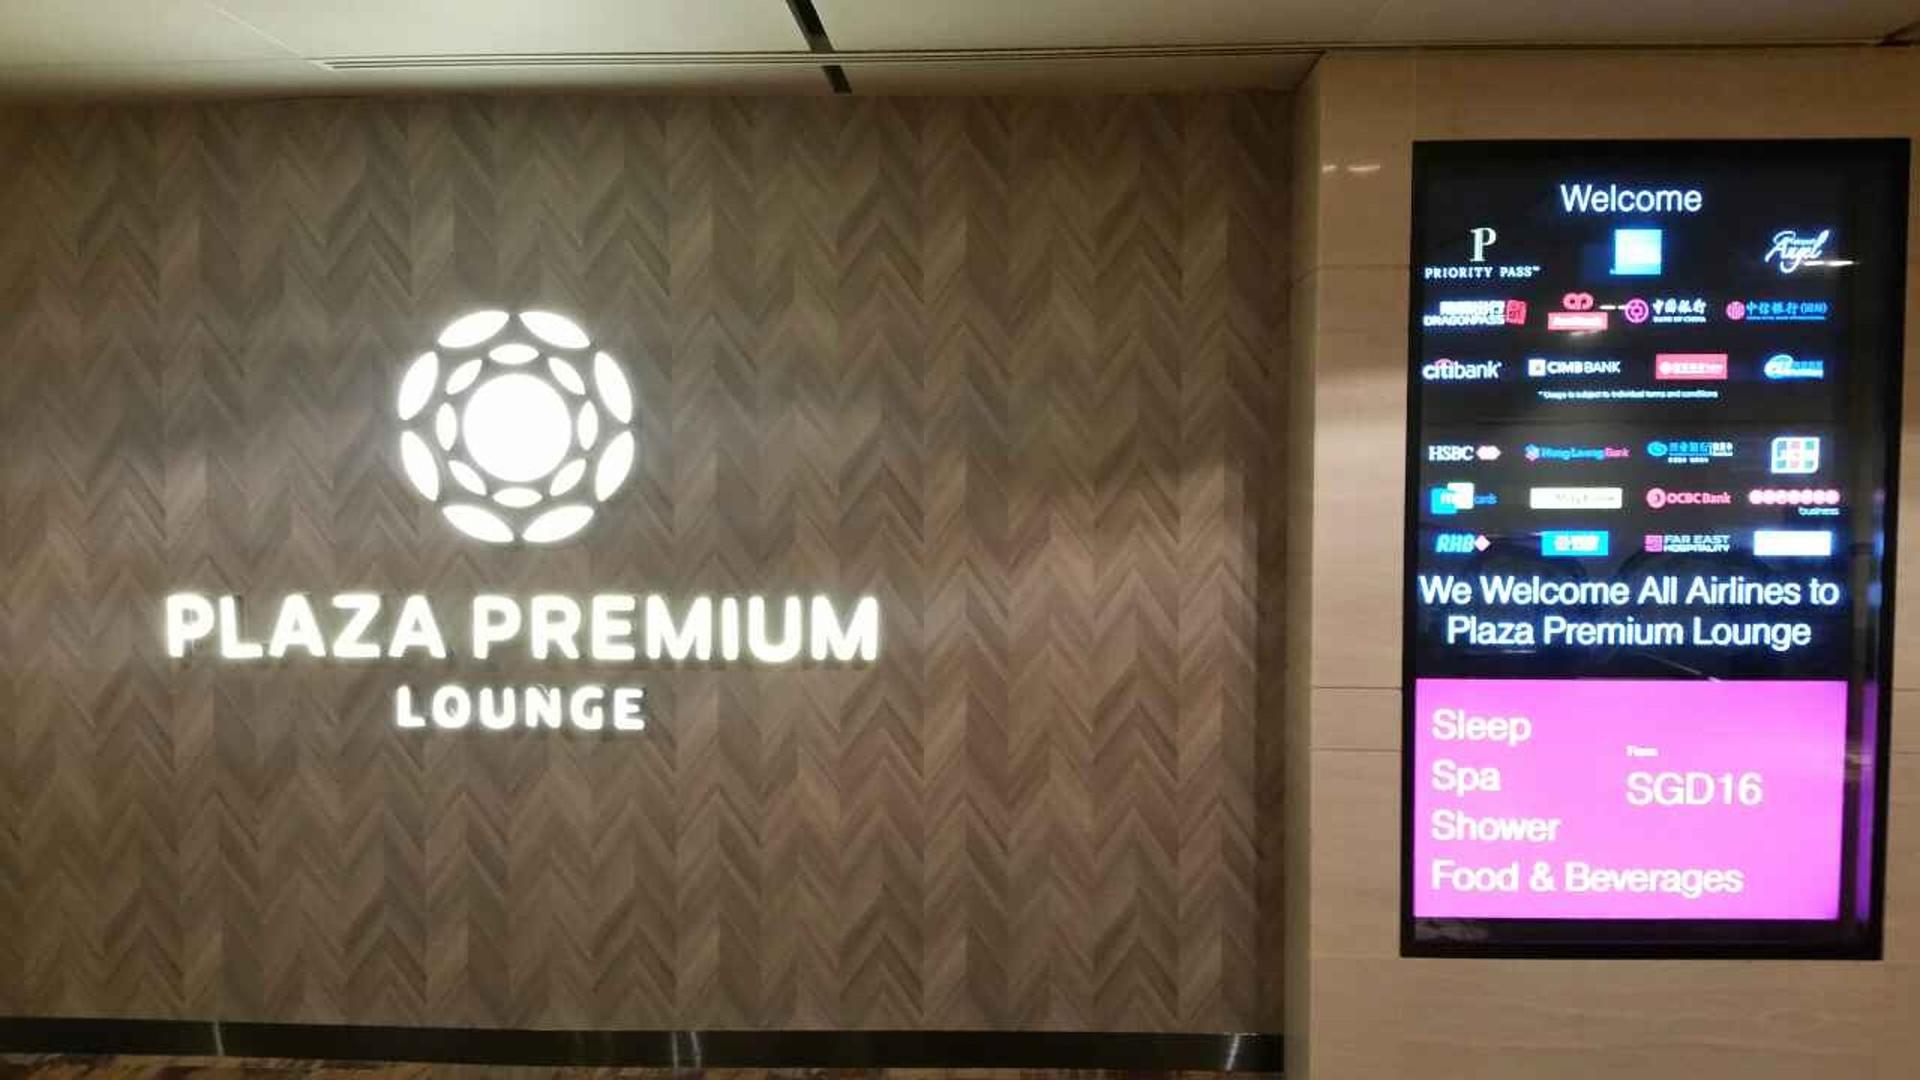 Plaza Premium Lounge image 18 of 45